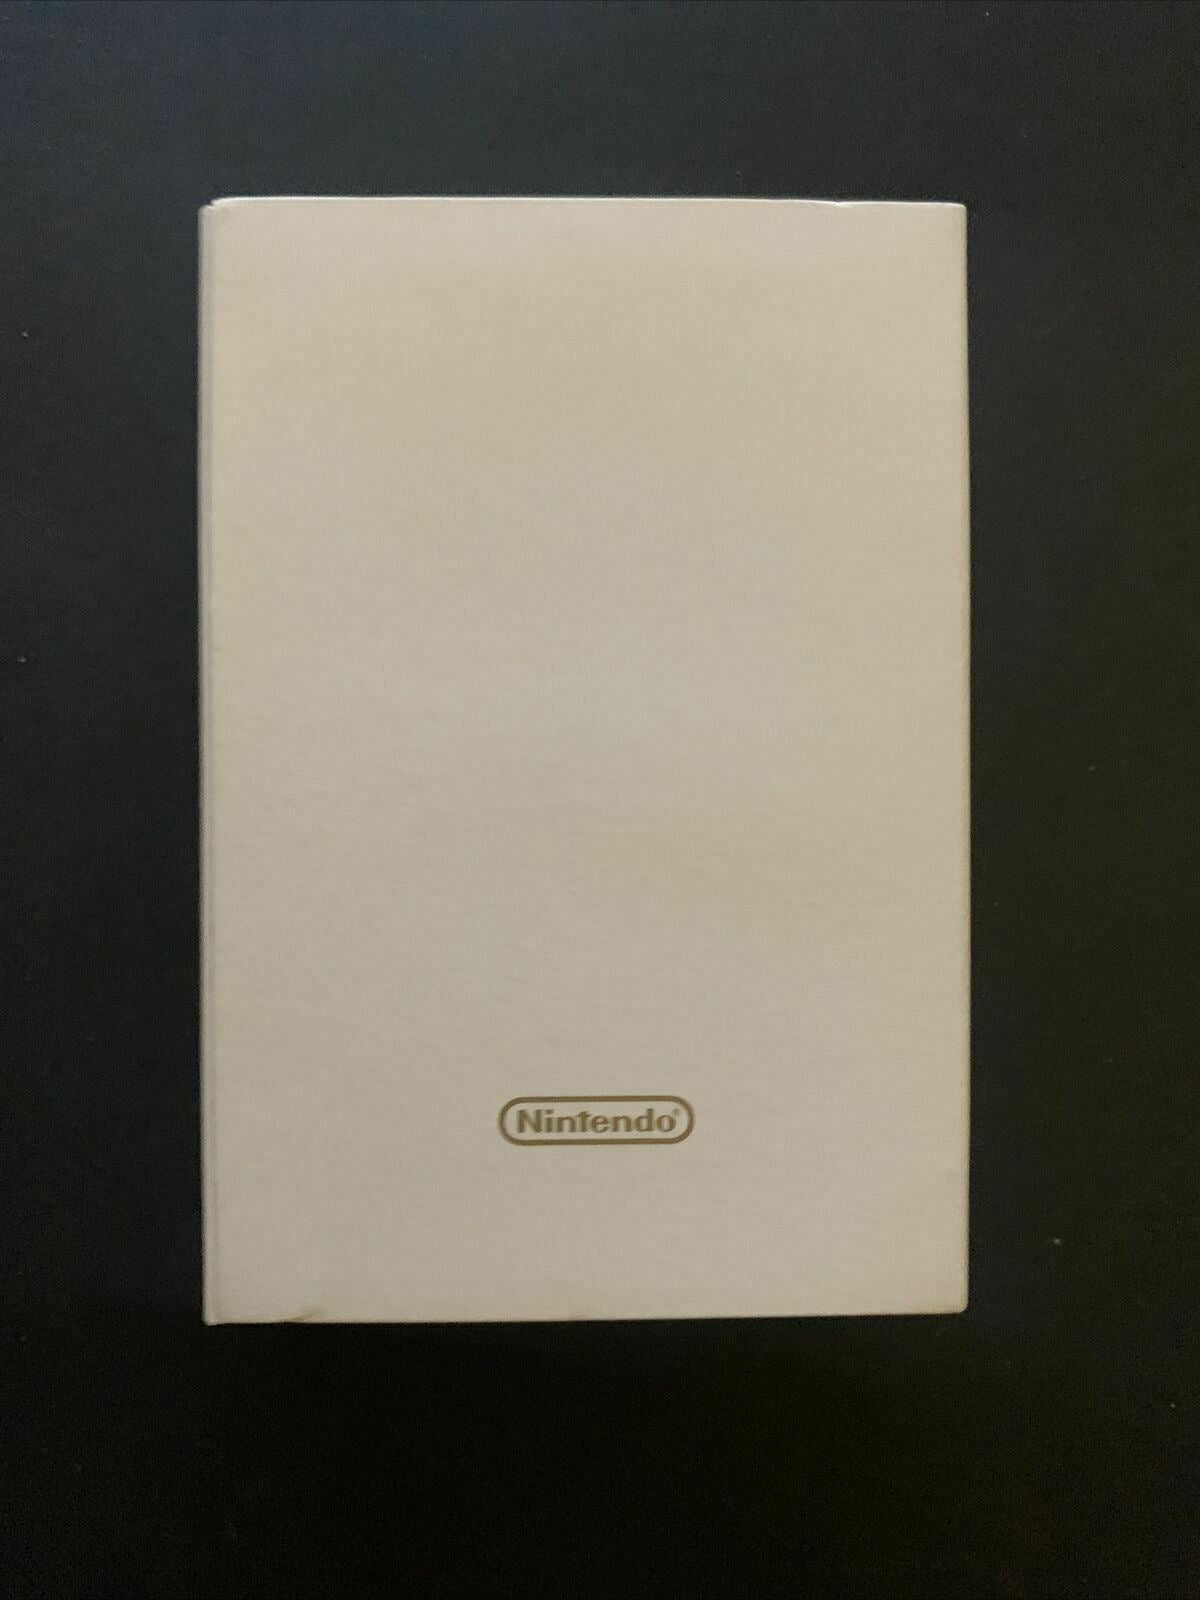 Premium Mario Trump Cards - 2012 Official Club Nintendo Collection Limited Ed.